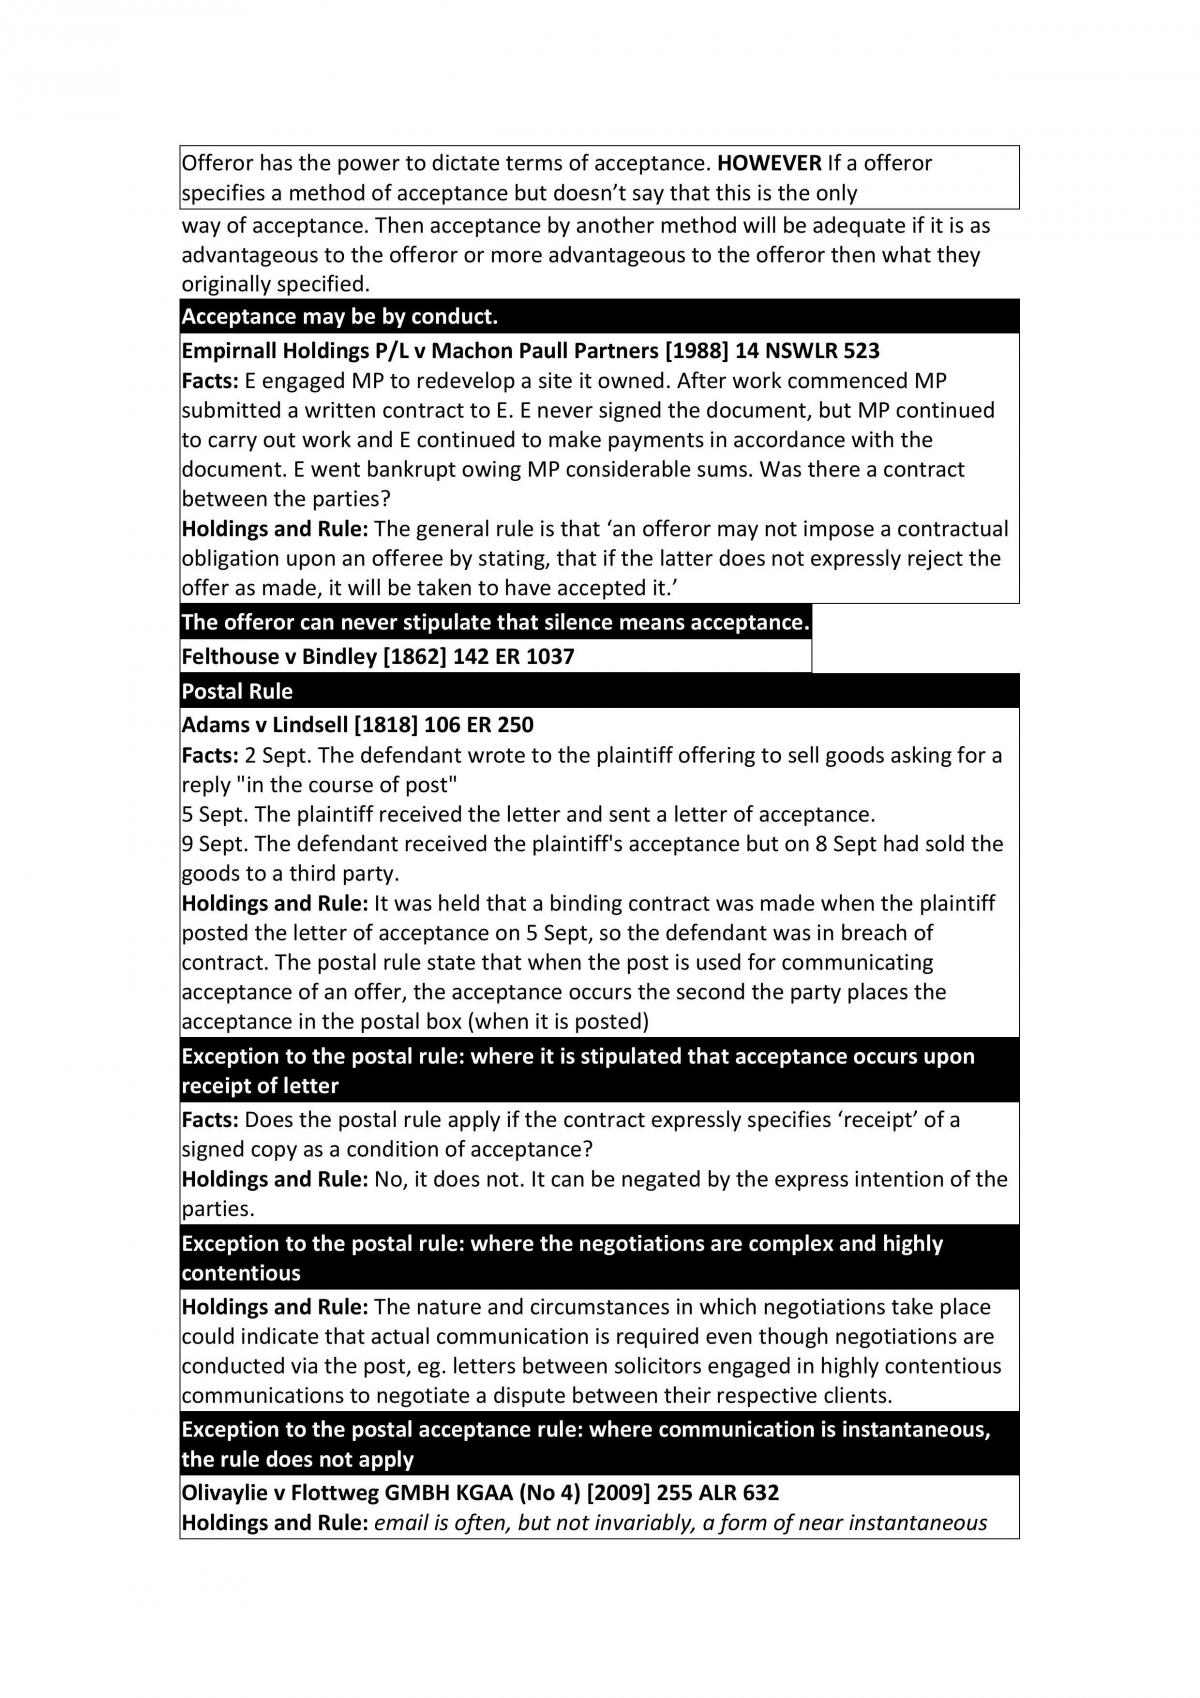 Full Mid Semester Exam Case Summaries  - Page 12